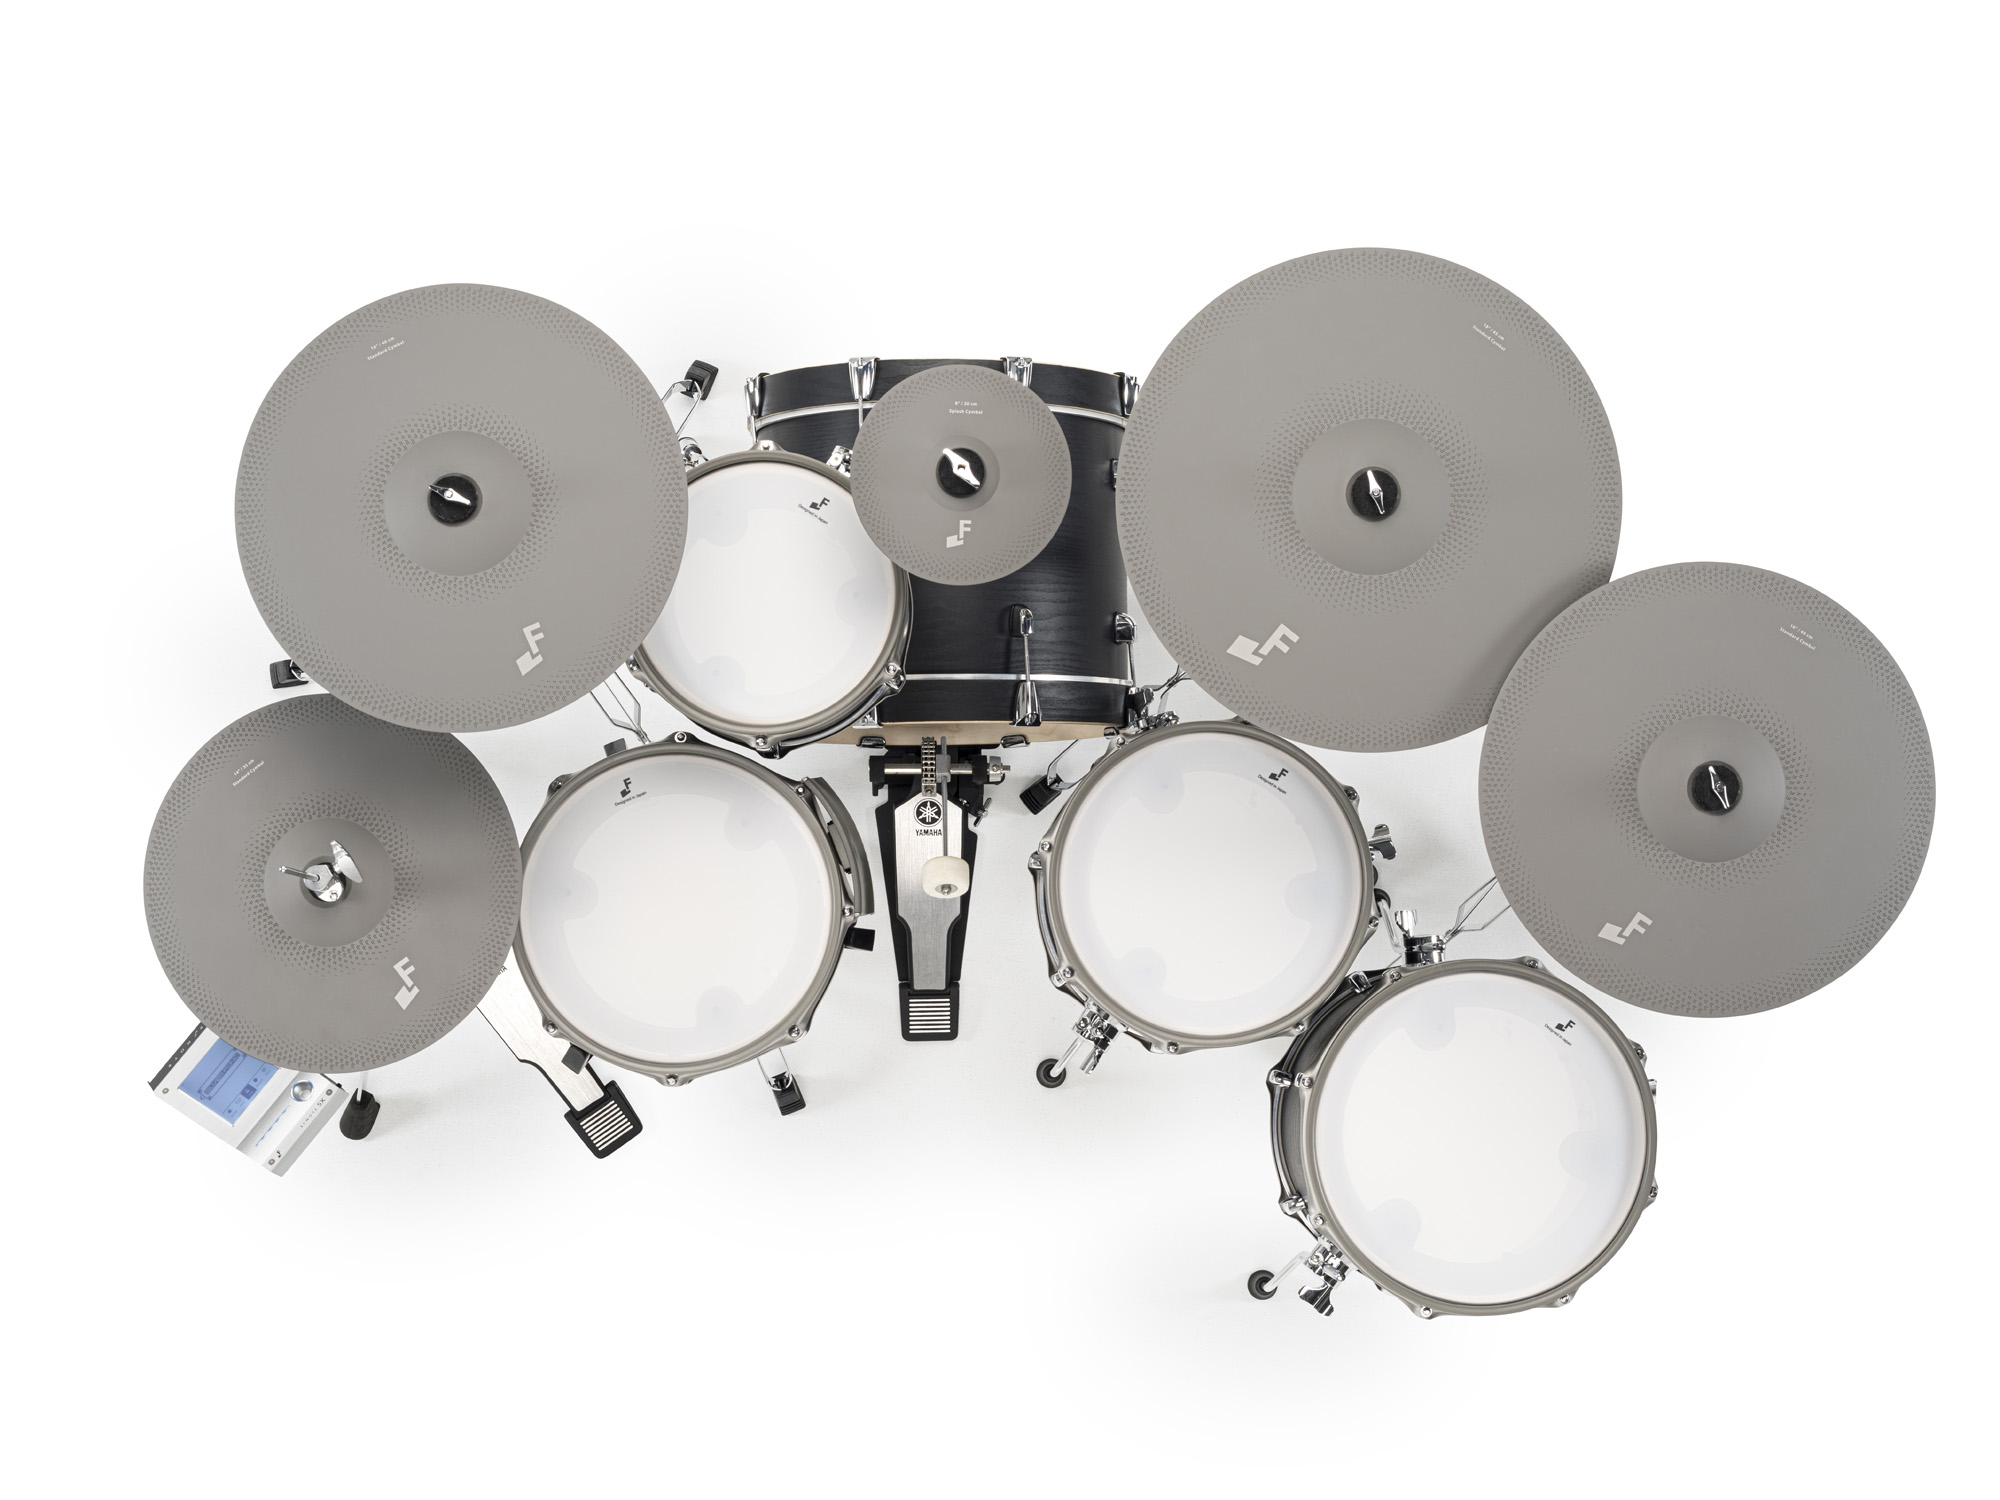 Efnote Efd5x Drum Kit - Electronic drum kit & set - Variation 2